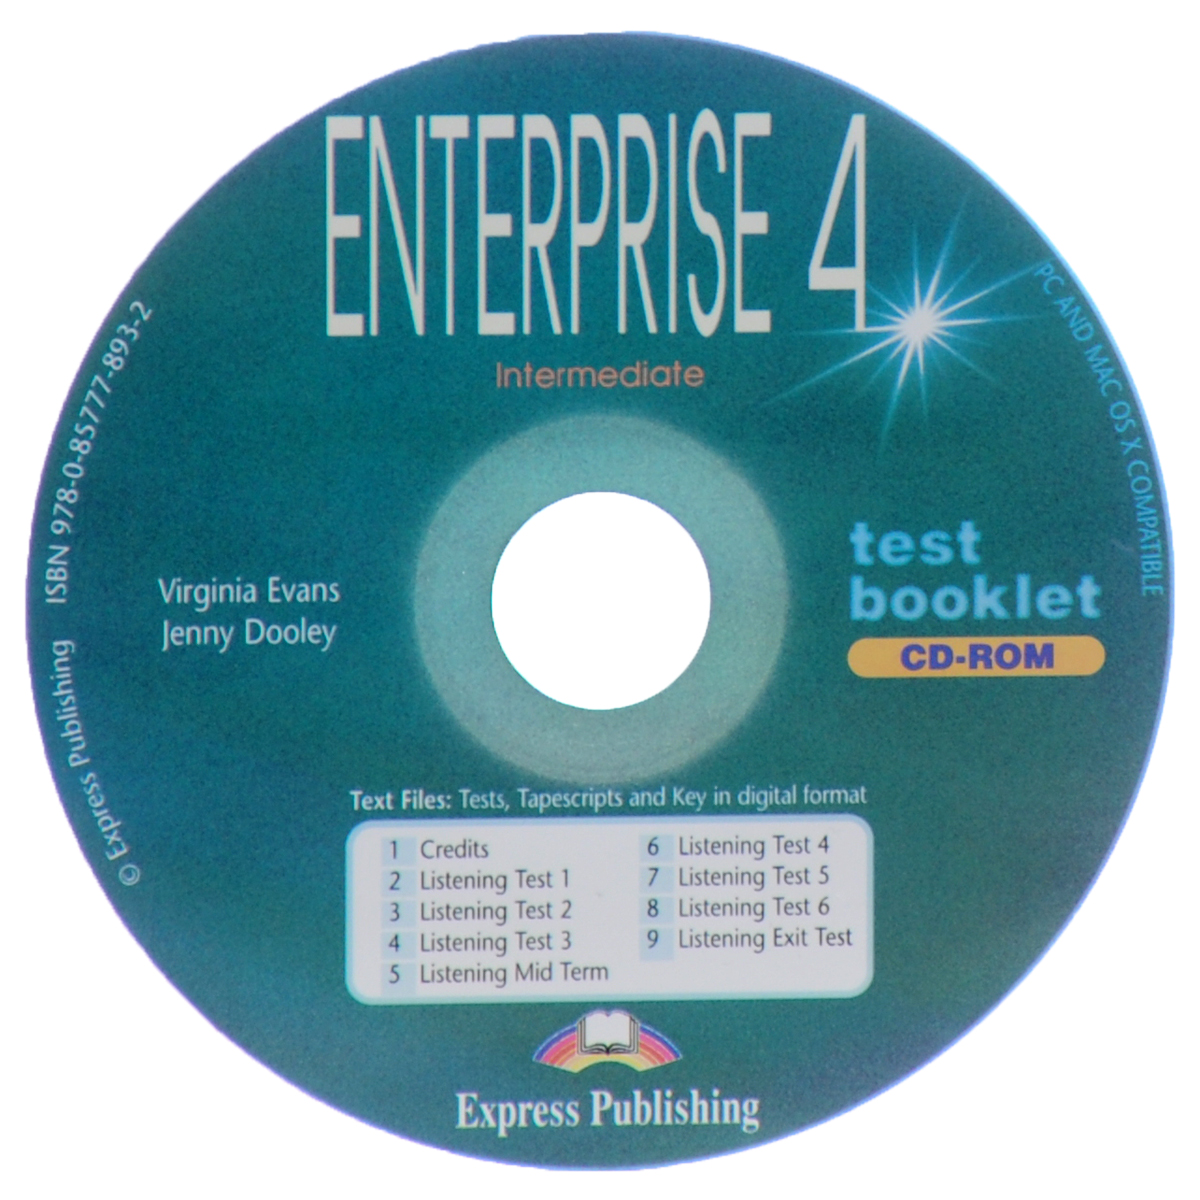 Enterprise 4 workbook. Intermediate Test booklet. Virginia Evans. Enterprise 4. Intermediate Test 4.